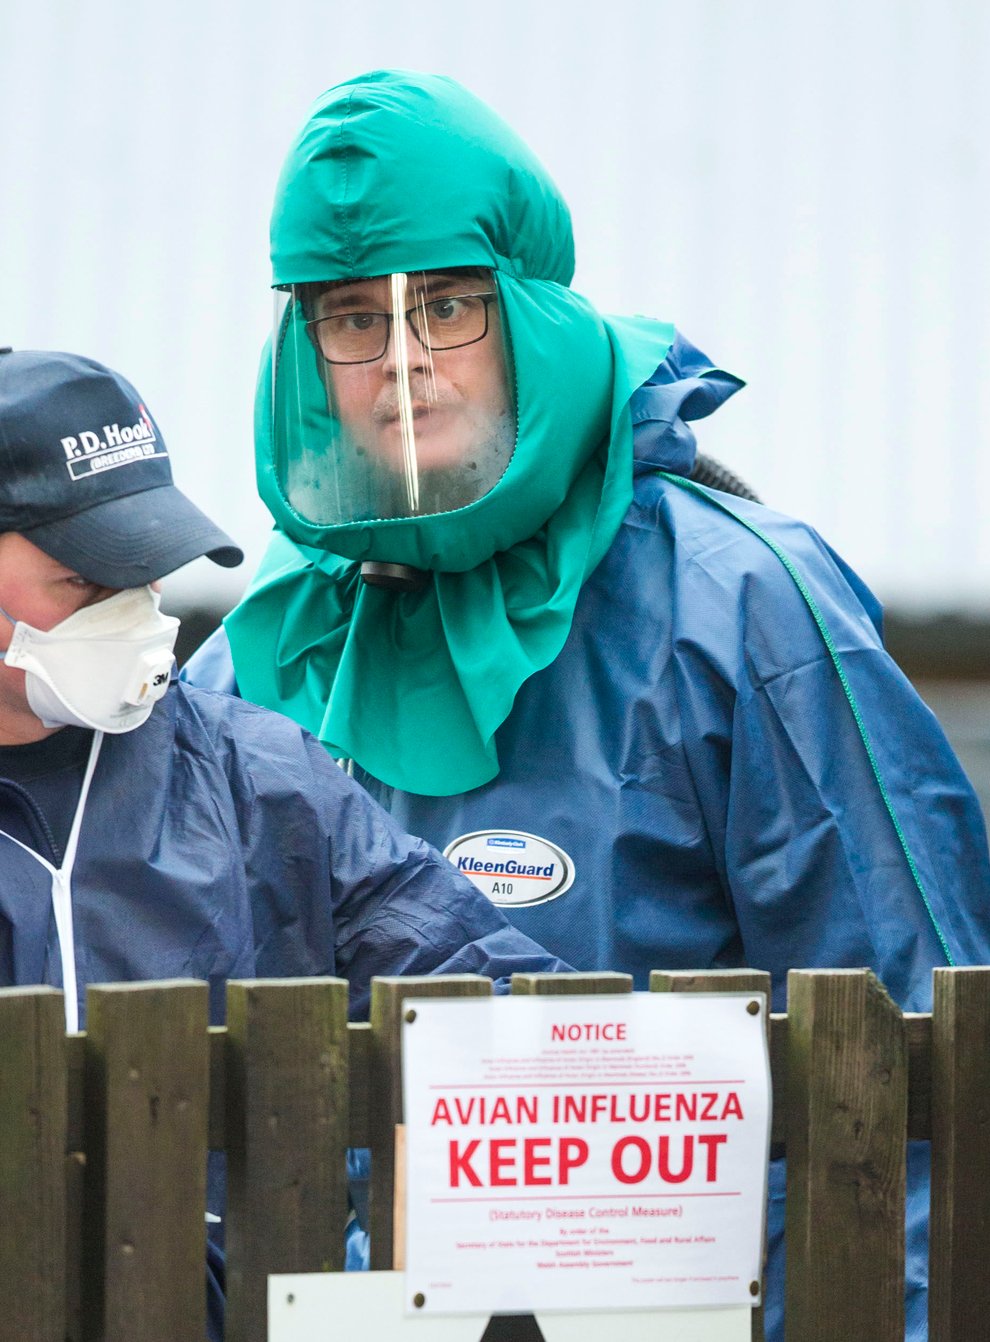 Suspected case of bird flu